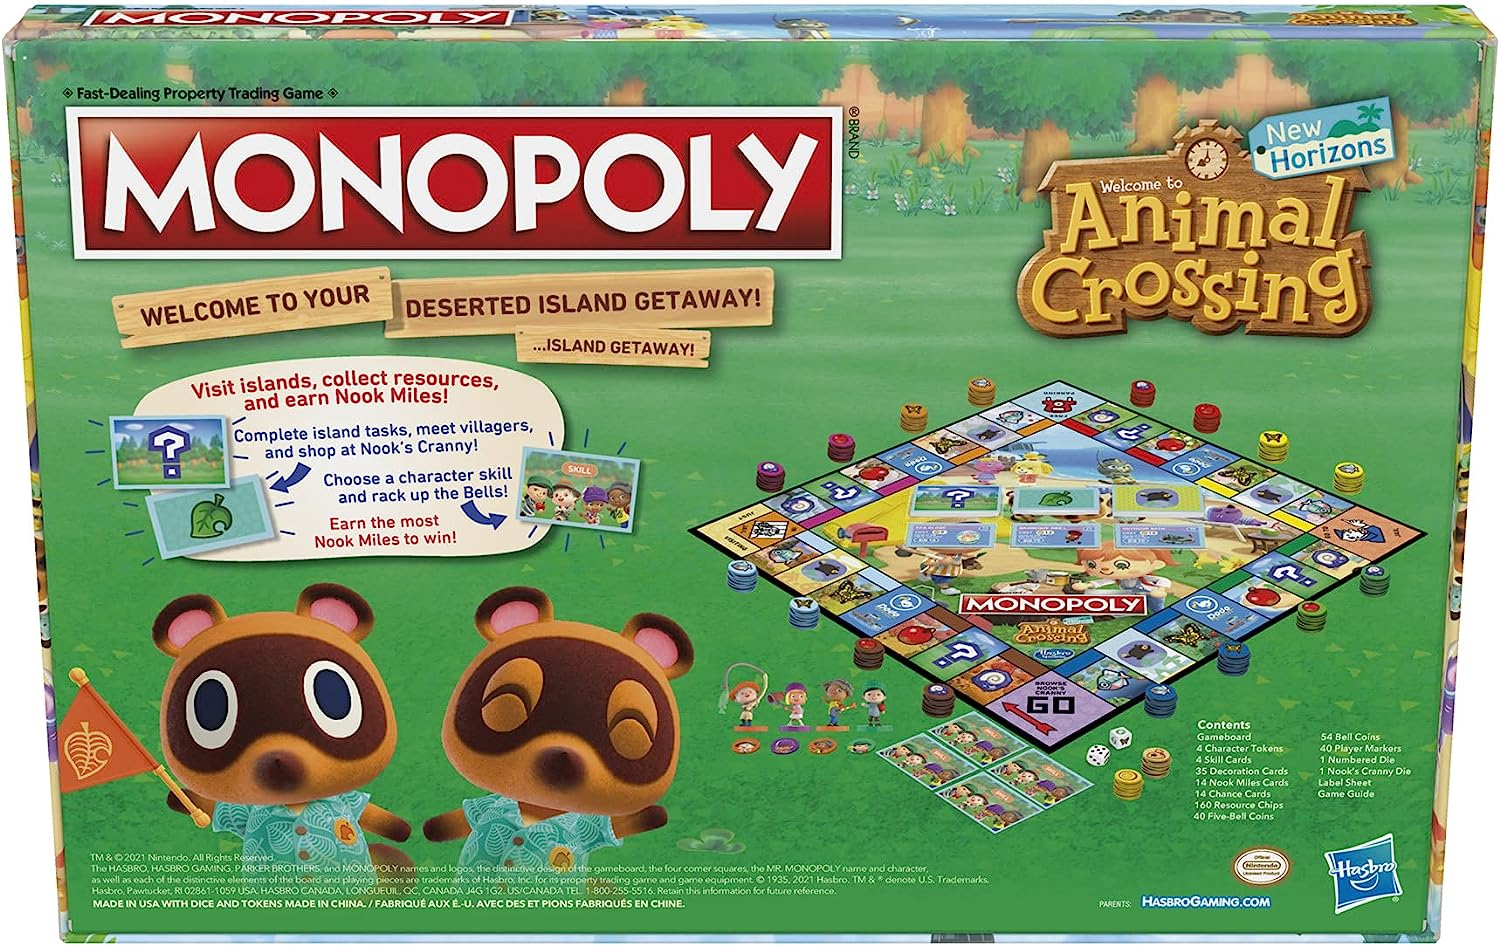 Let's Play St. Cloud Monopoly!